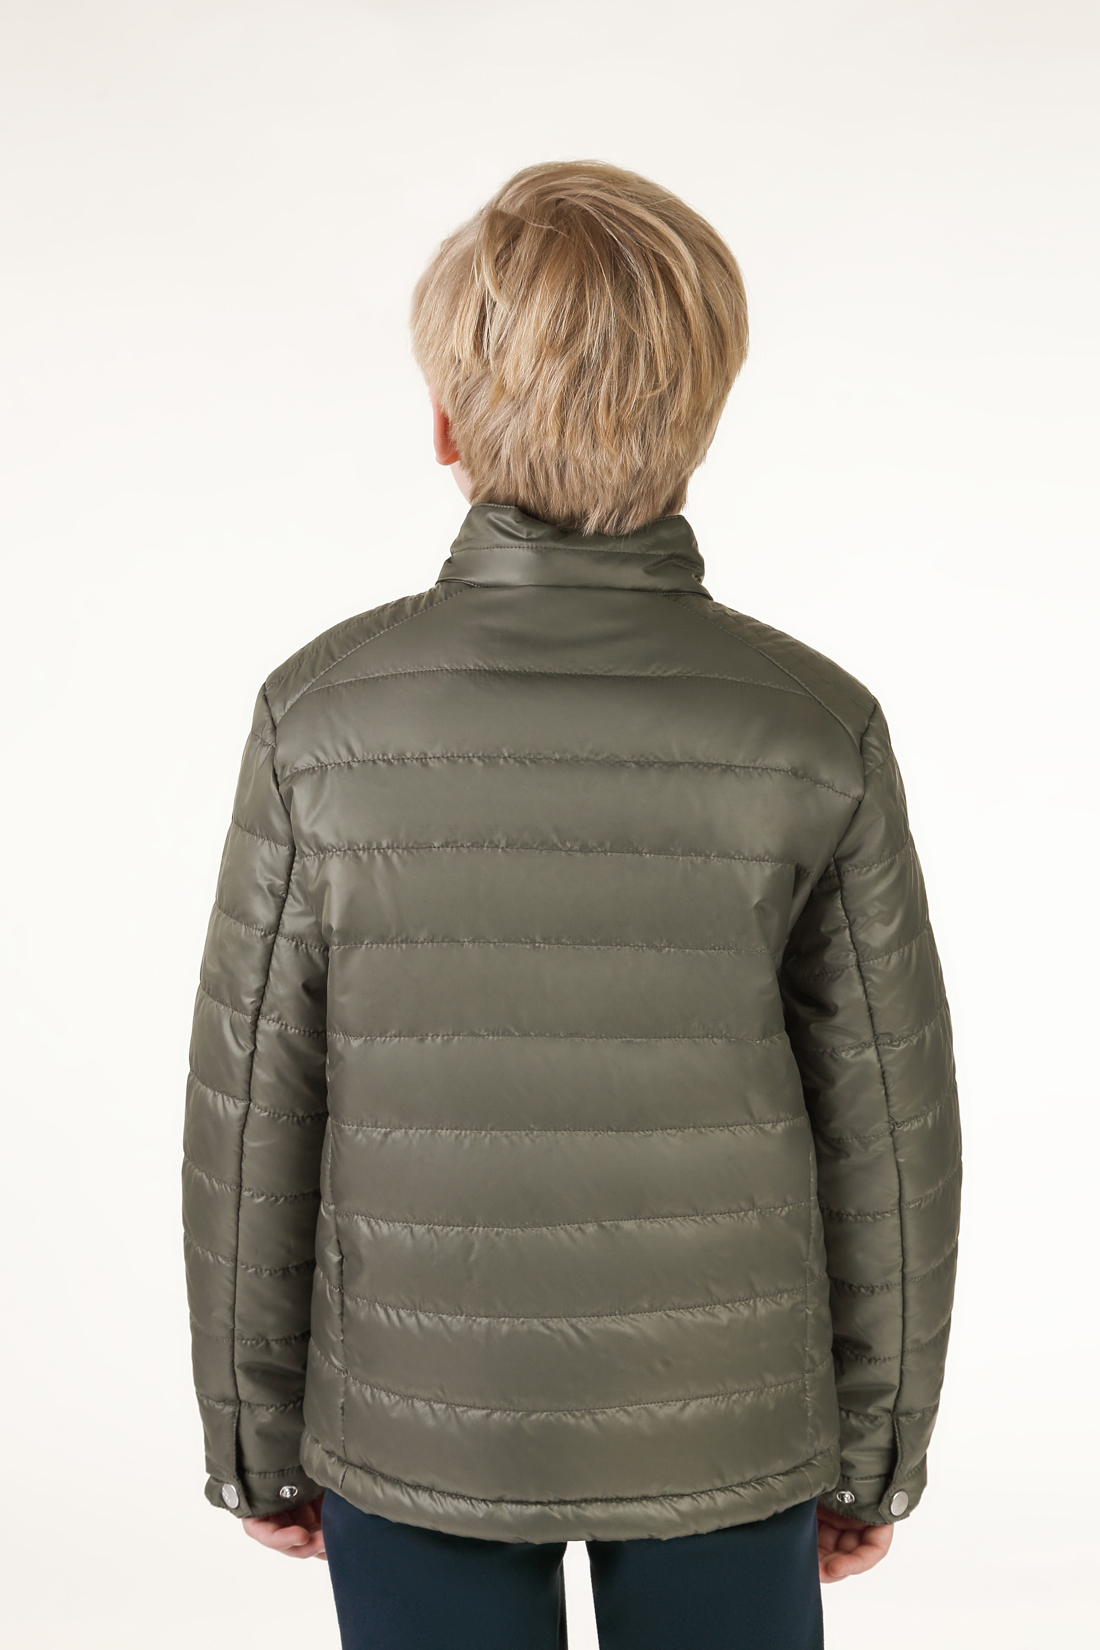 Куртка для мальчика (арт. baon BJ538002), размер 158-164, цвет зеленый Куртка для мальчика (арт. baon BJ538002) - фото 2